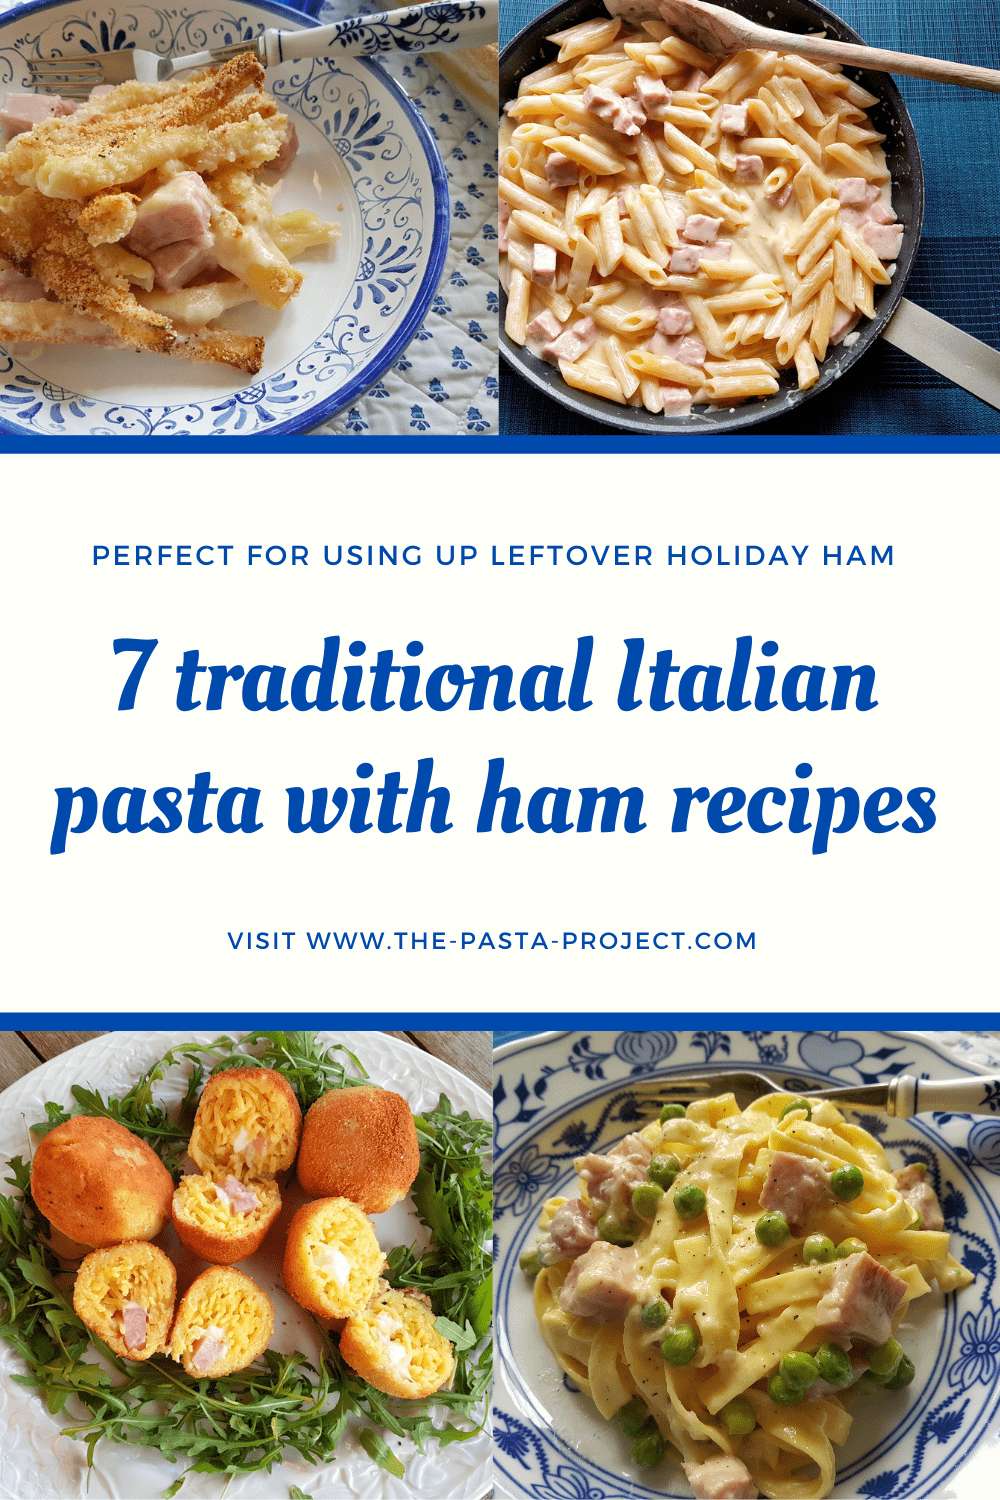 7 traditional Italian pasta with ham recipes